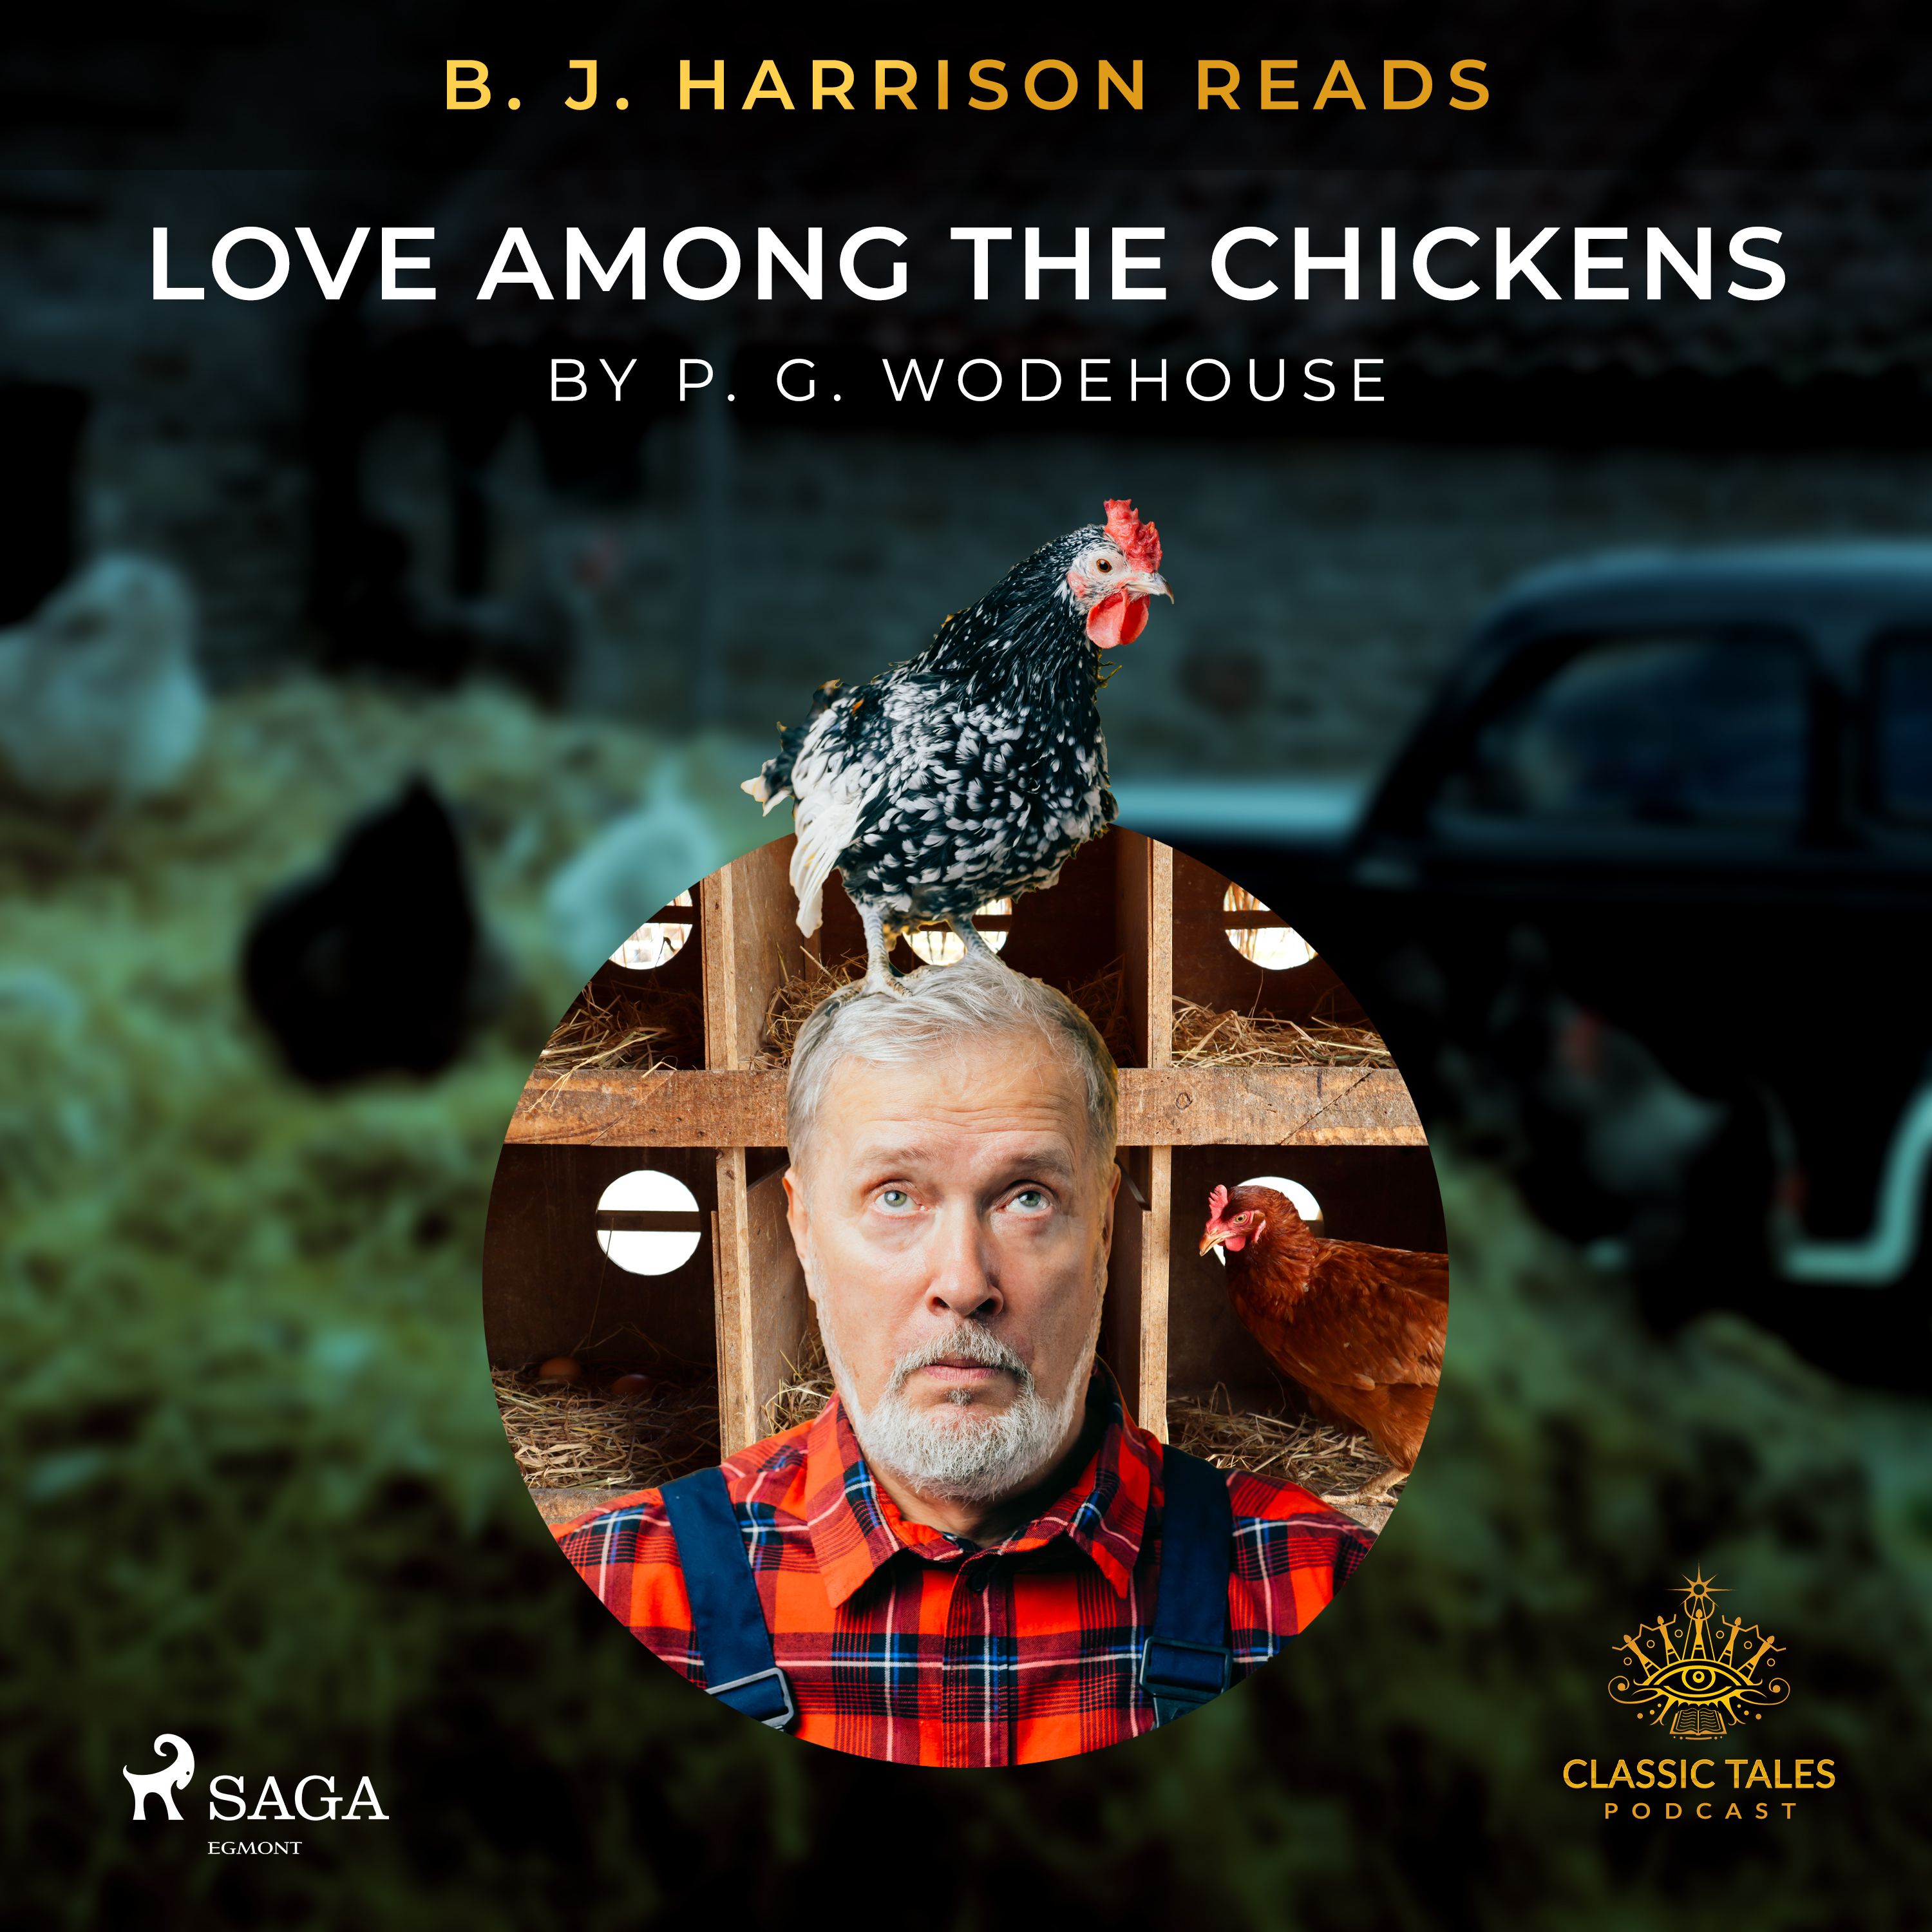 B. J. Harrison Reads Love Among the Chickens, ljudbok av P.G. Wodehouse